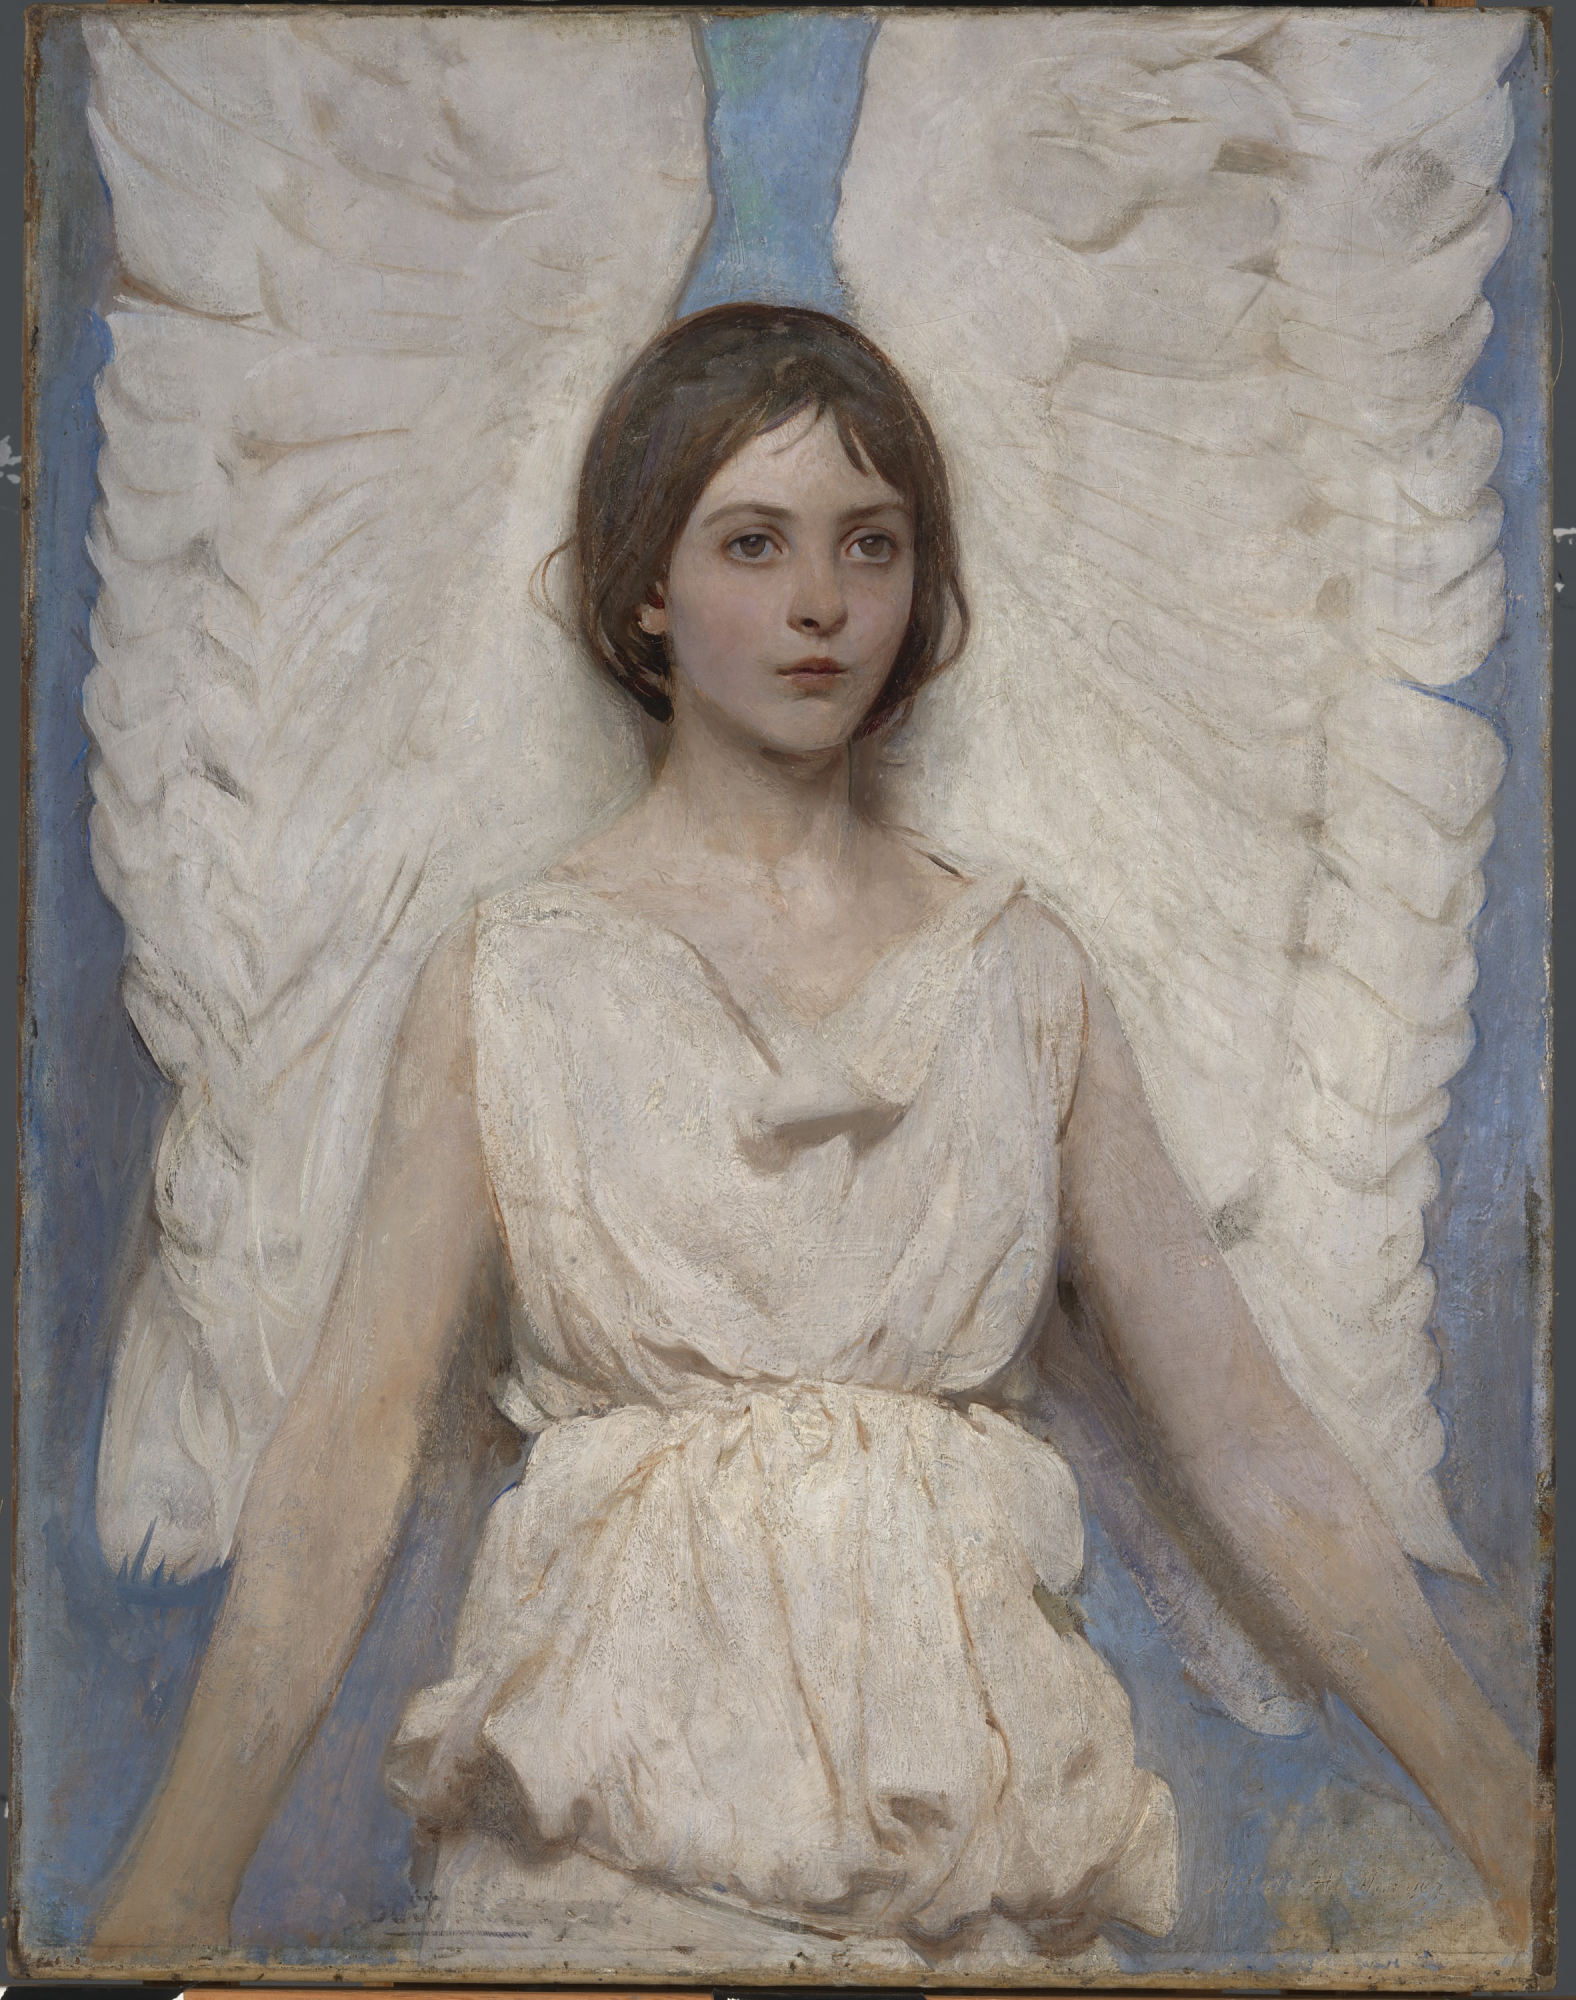 Engel by Abbott Handerson Thayer - 1887 - 92.0 x 71.5 cm Smithsonian American Art Museum